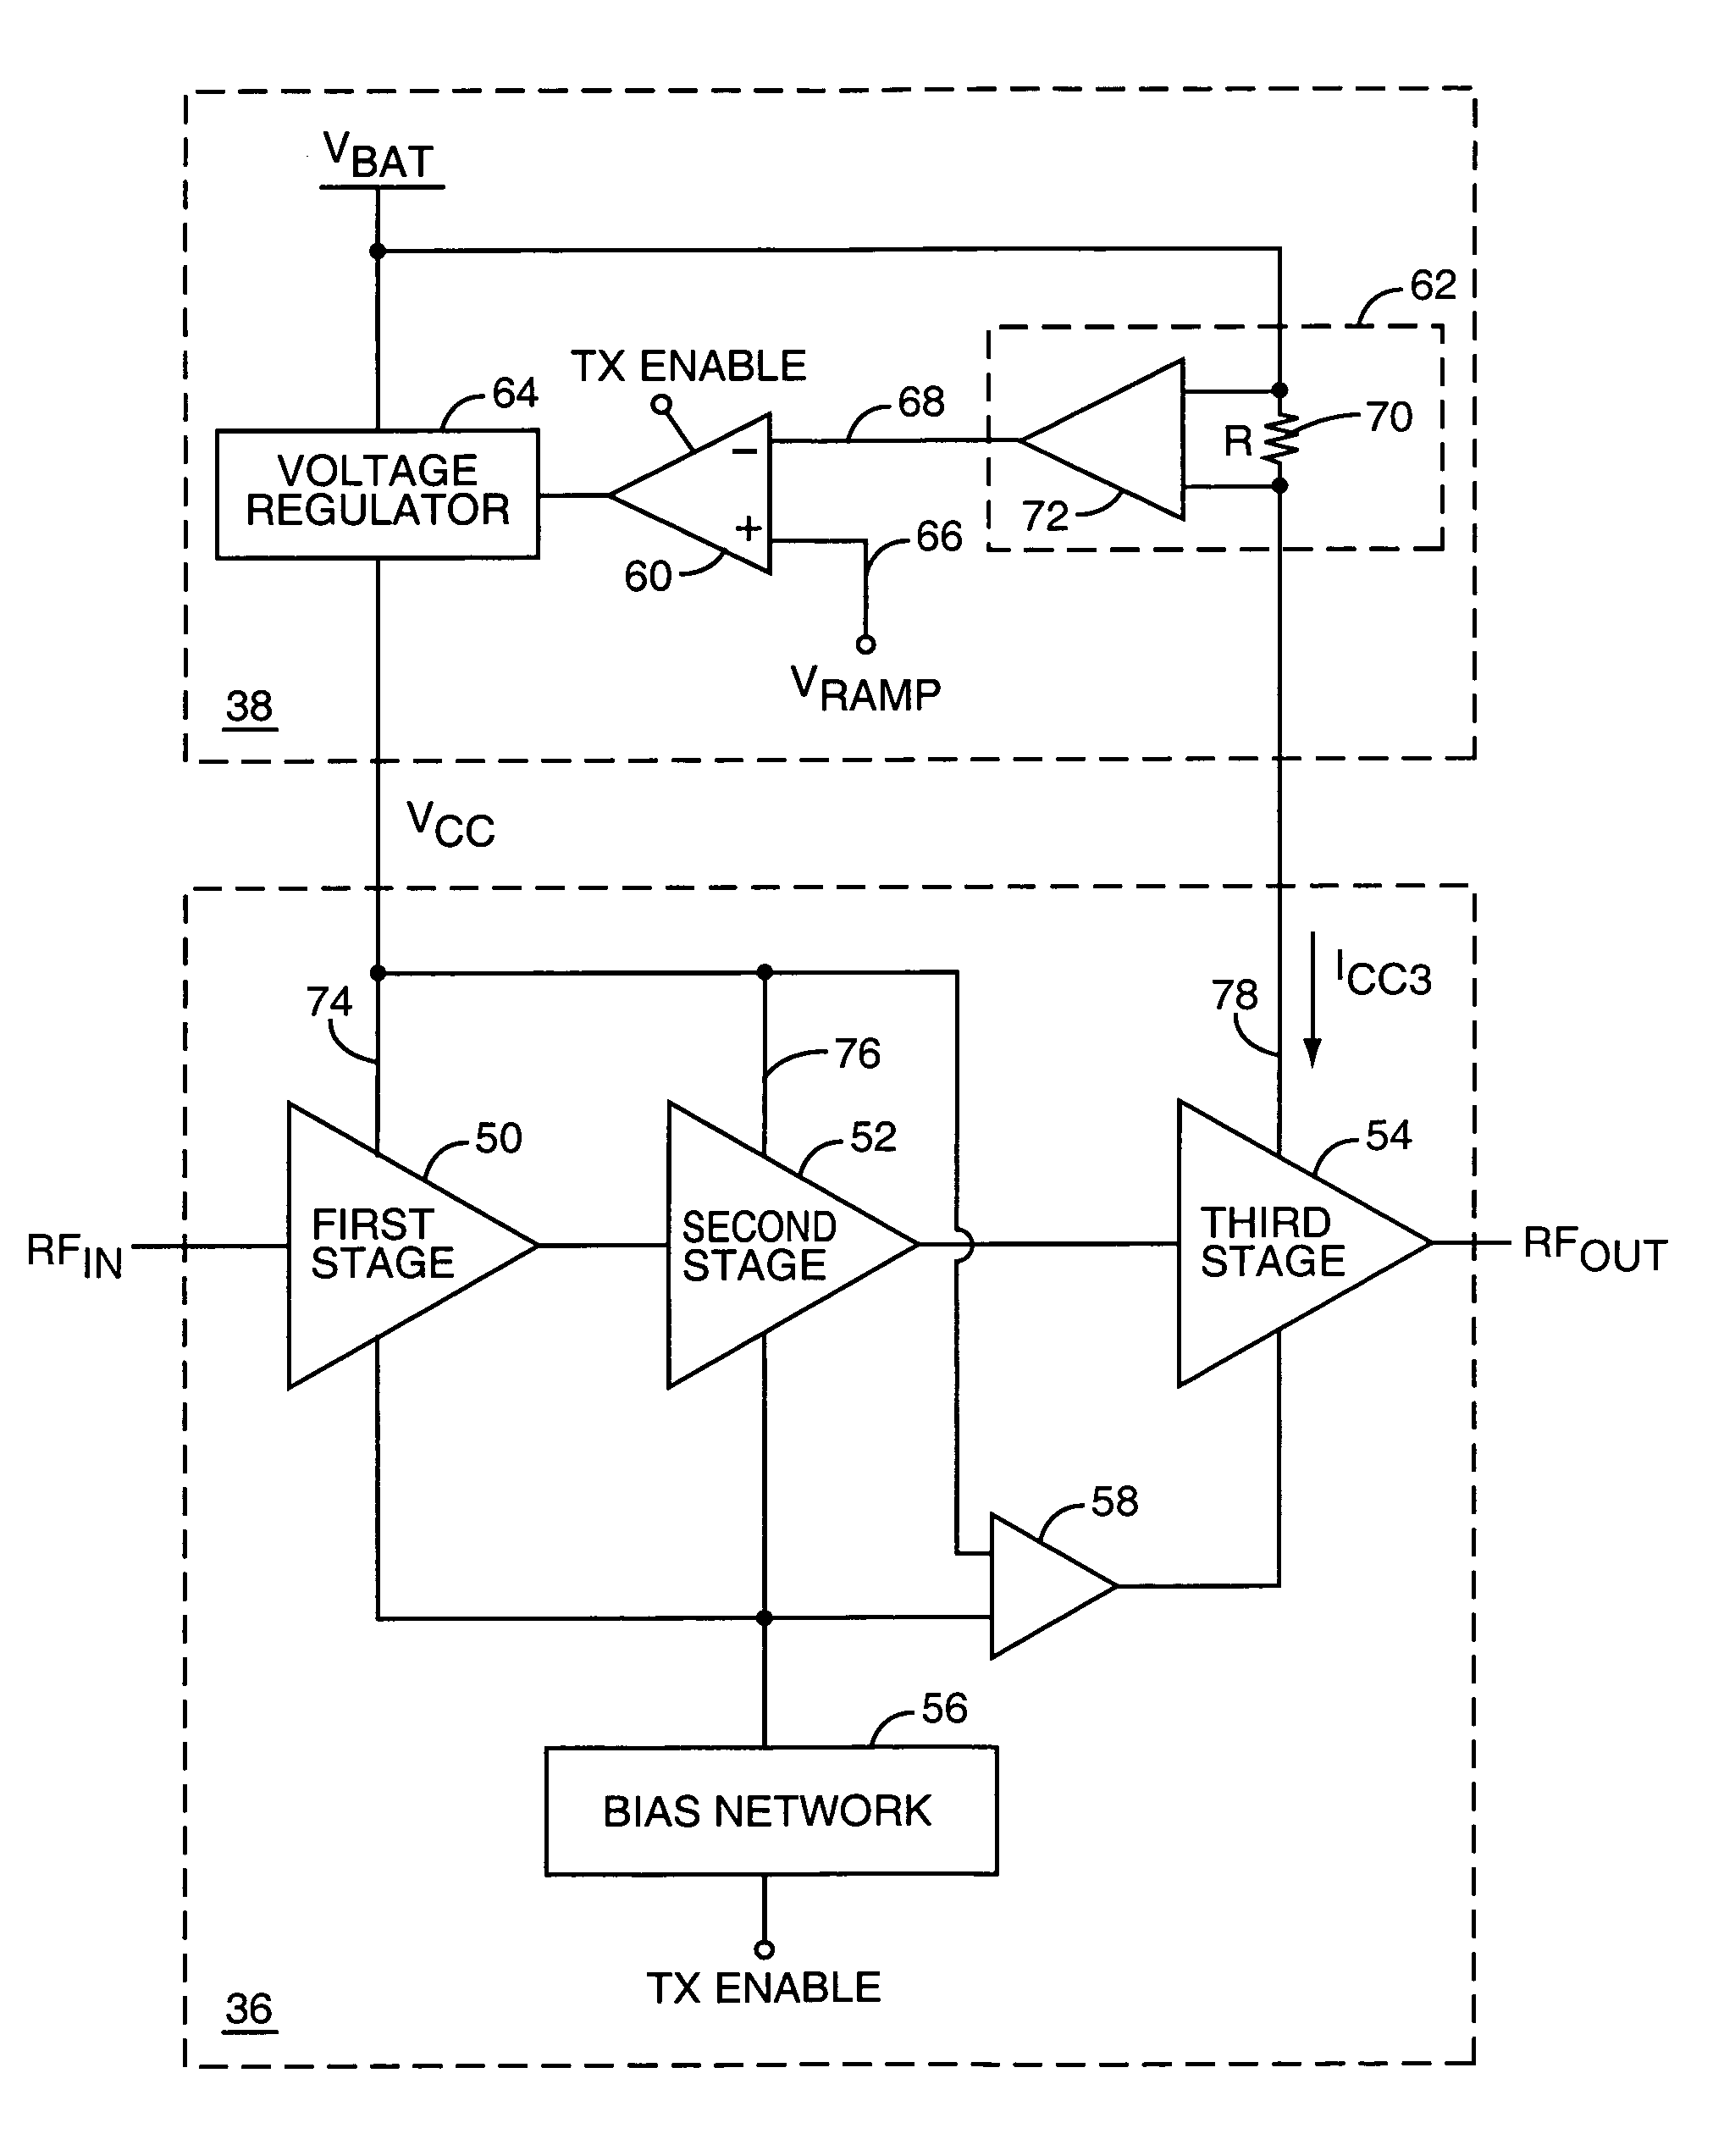 Power amplifier control technique for enhanced efficiency